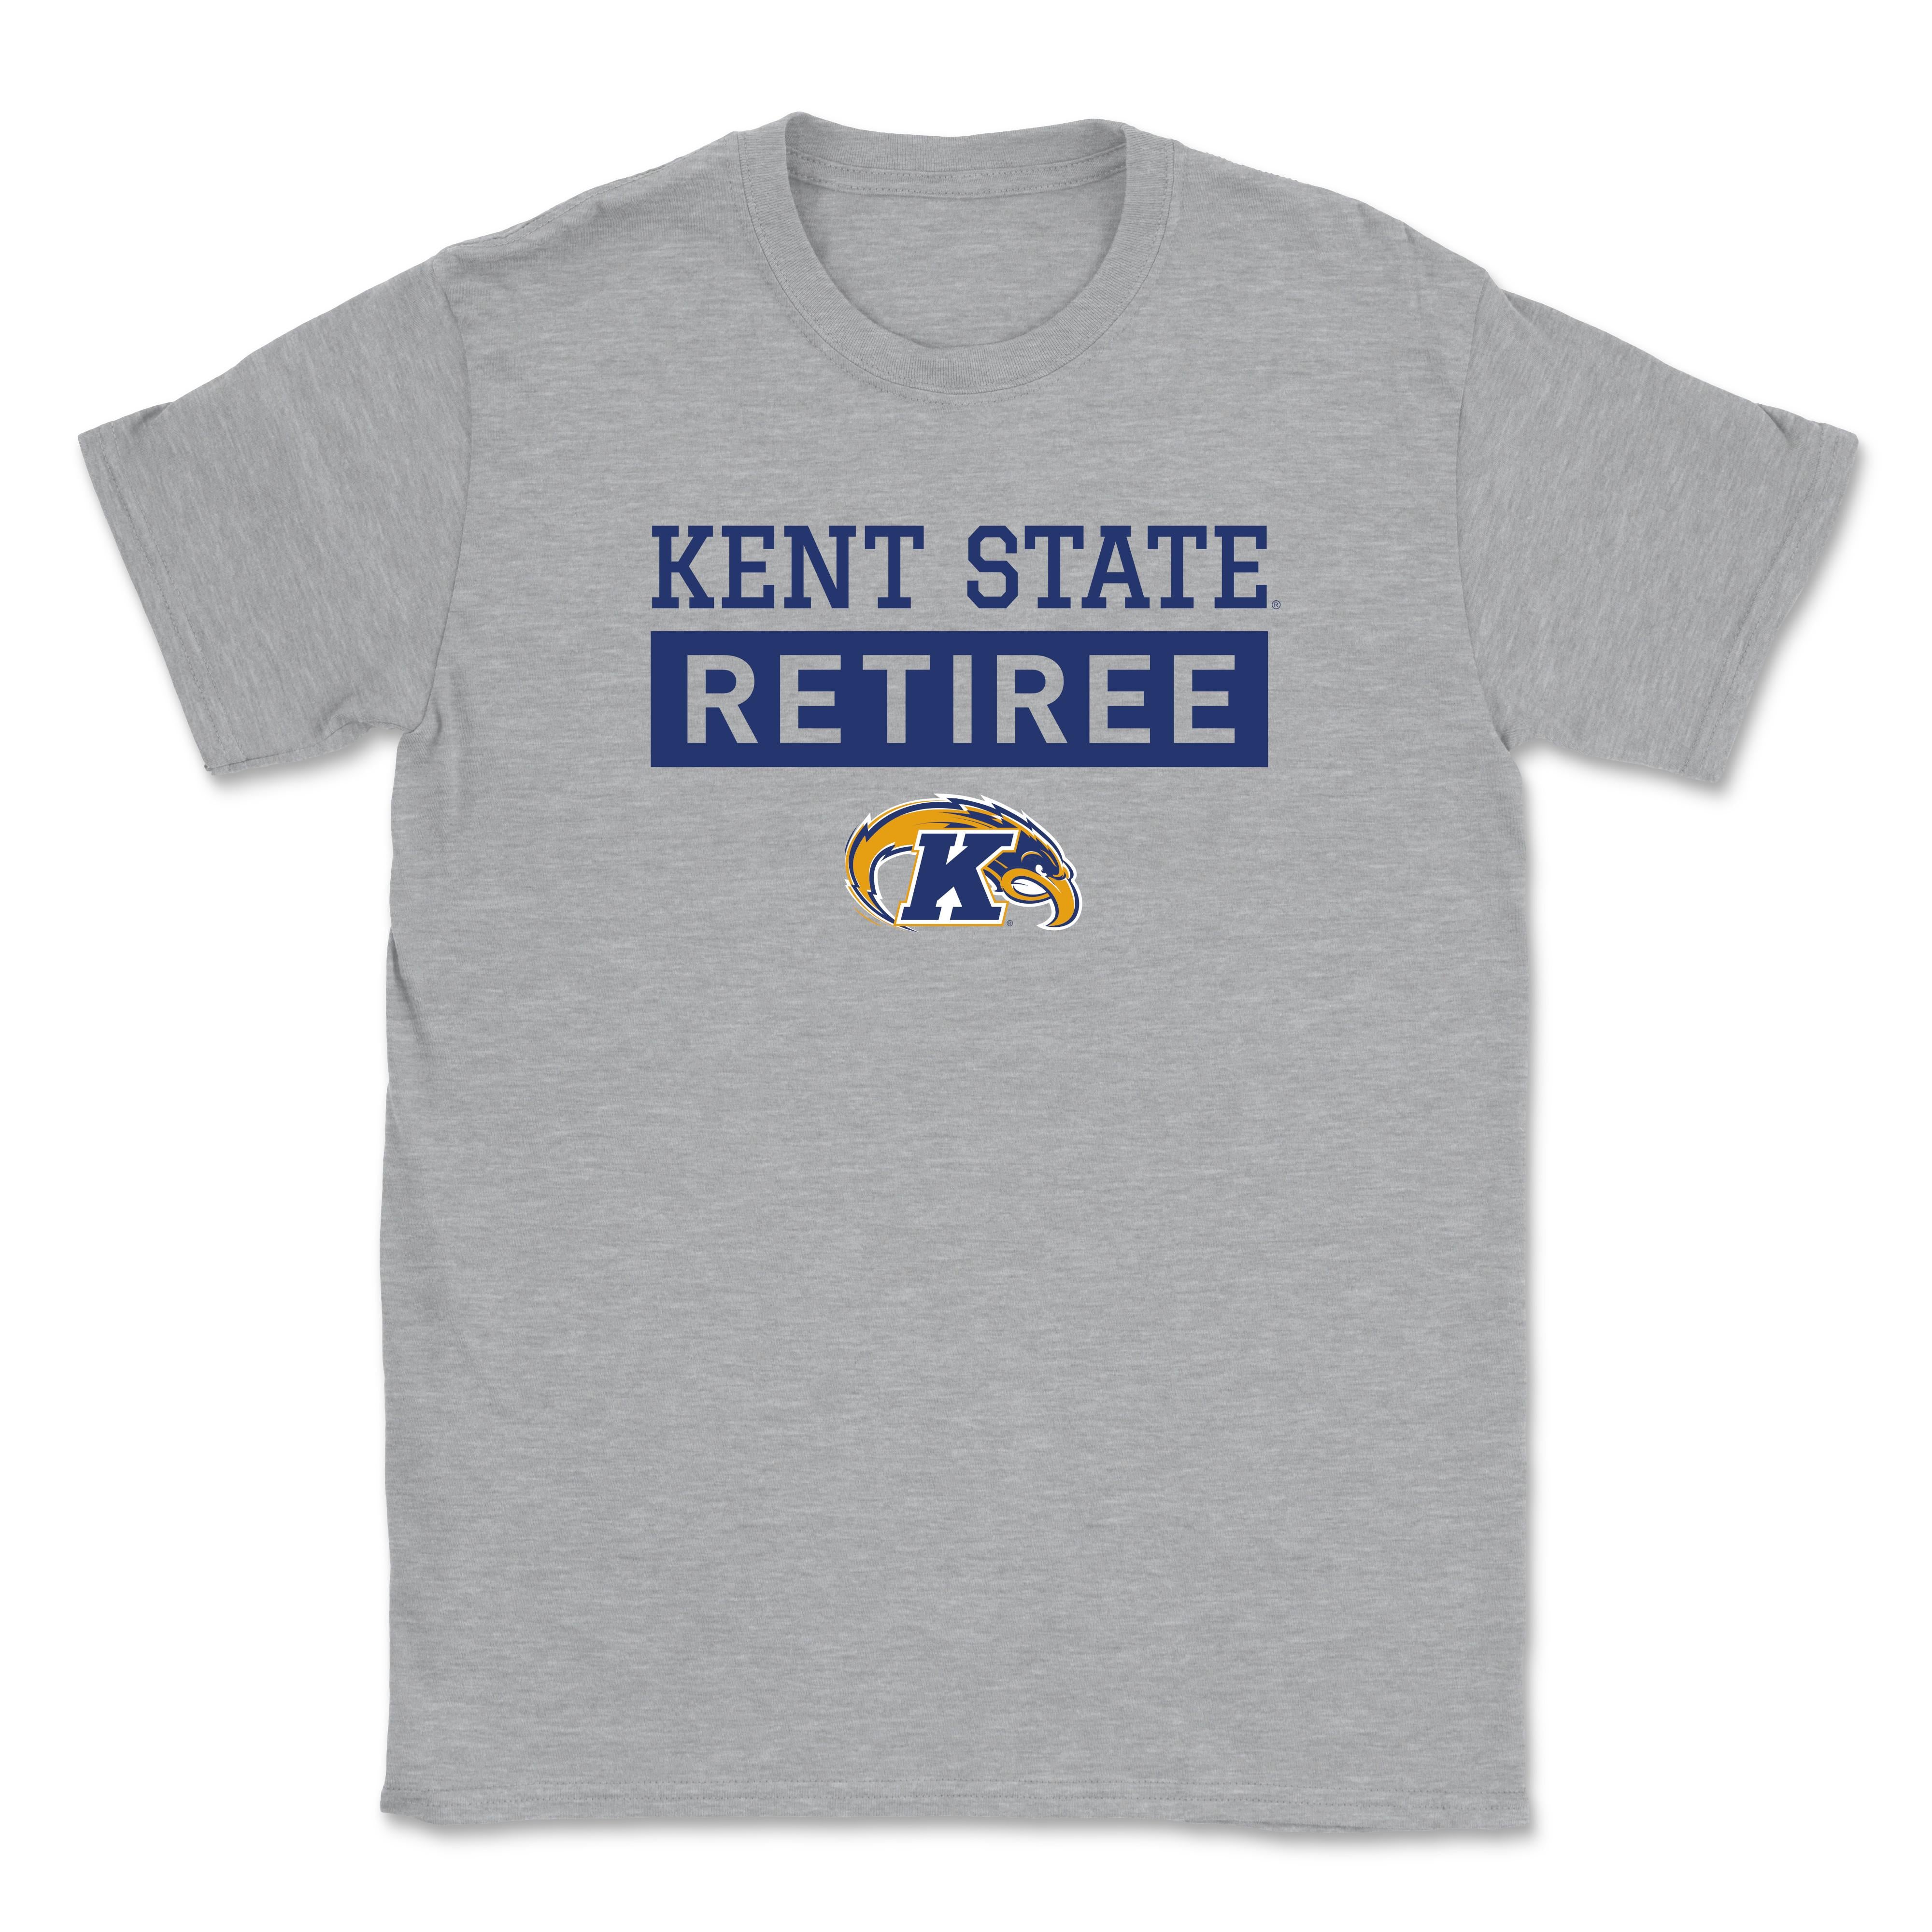 Kent State Retiree T-Shirt